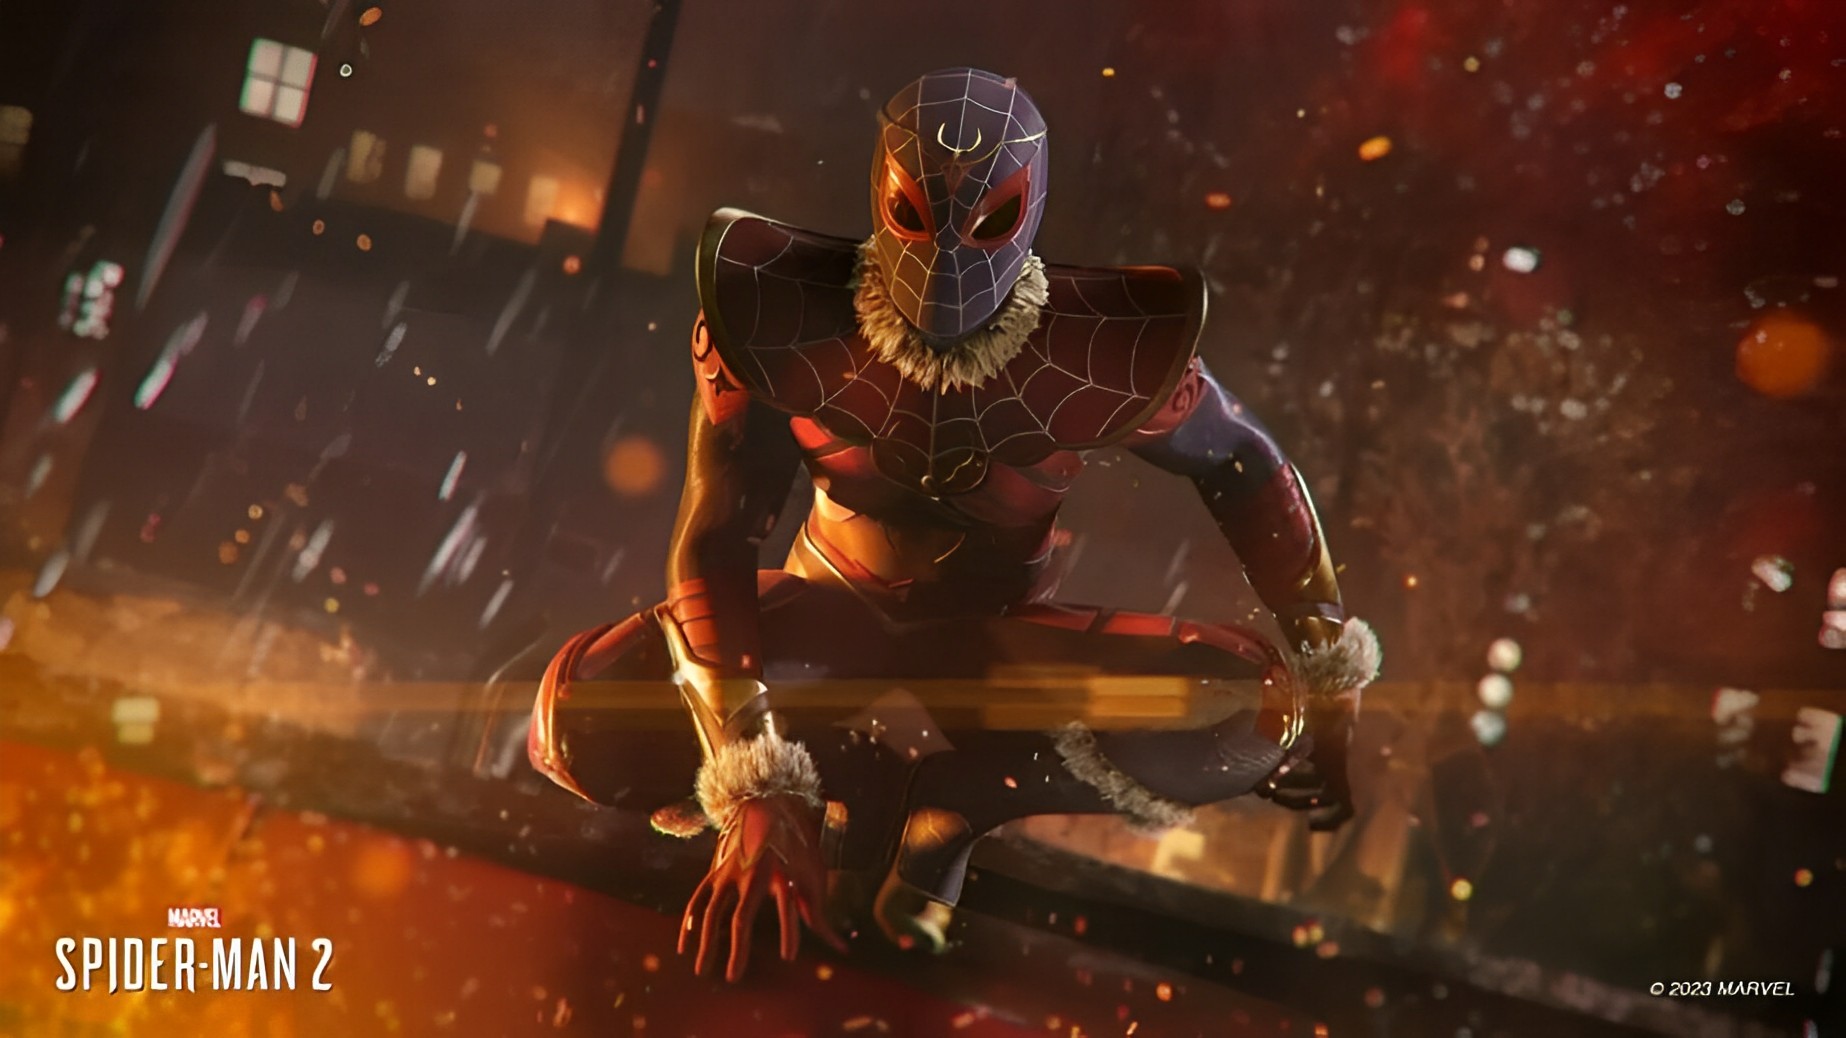 Marvel's Spider-Man 2 Stone Monkey Suit